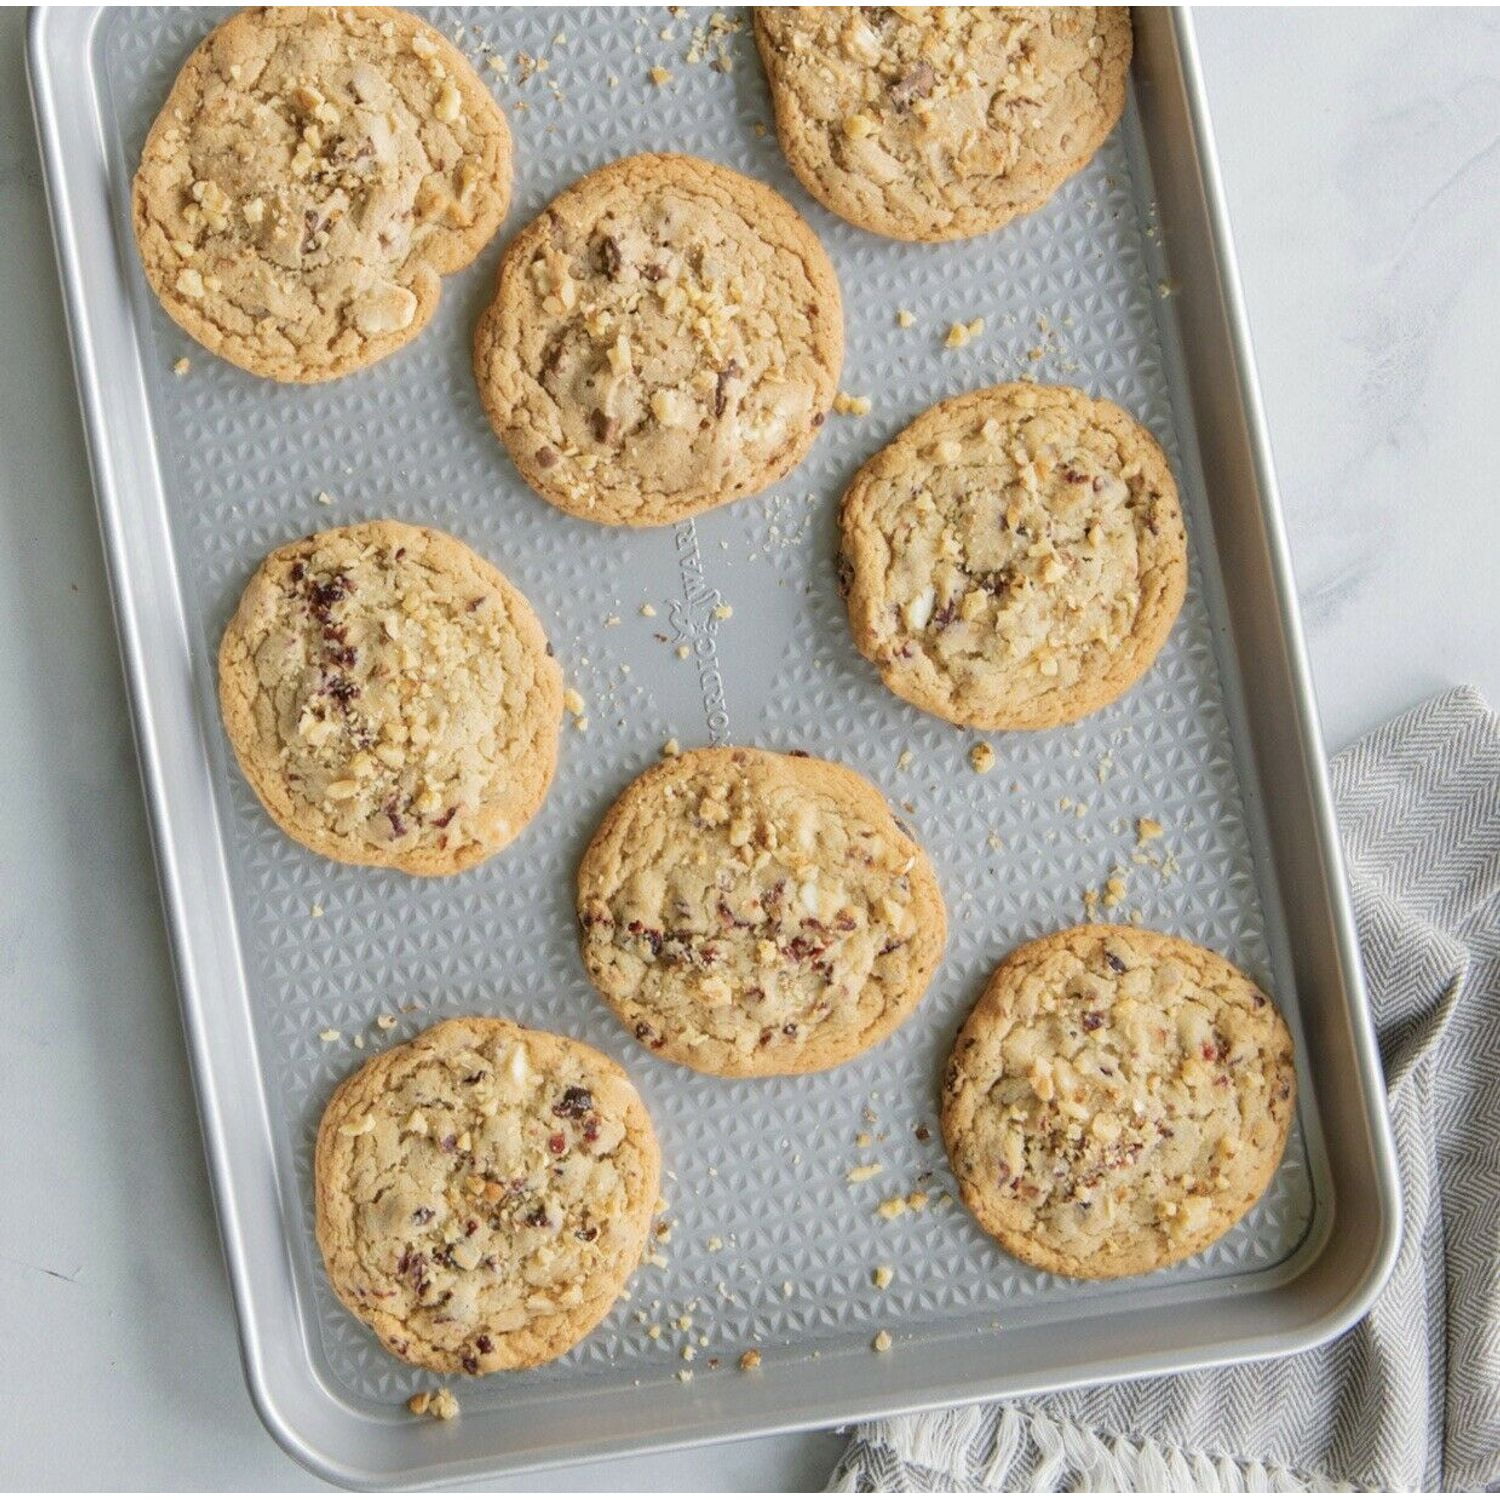 Nordic Ware Cookies & Cream Pan – Every Home Needs This Pan!